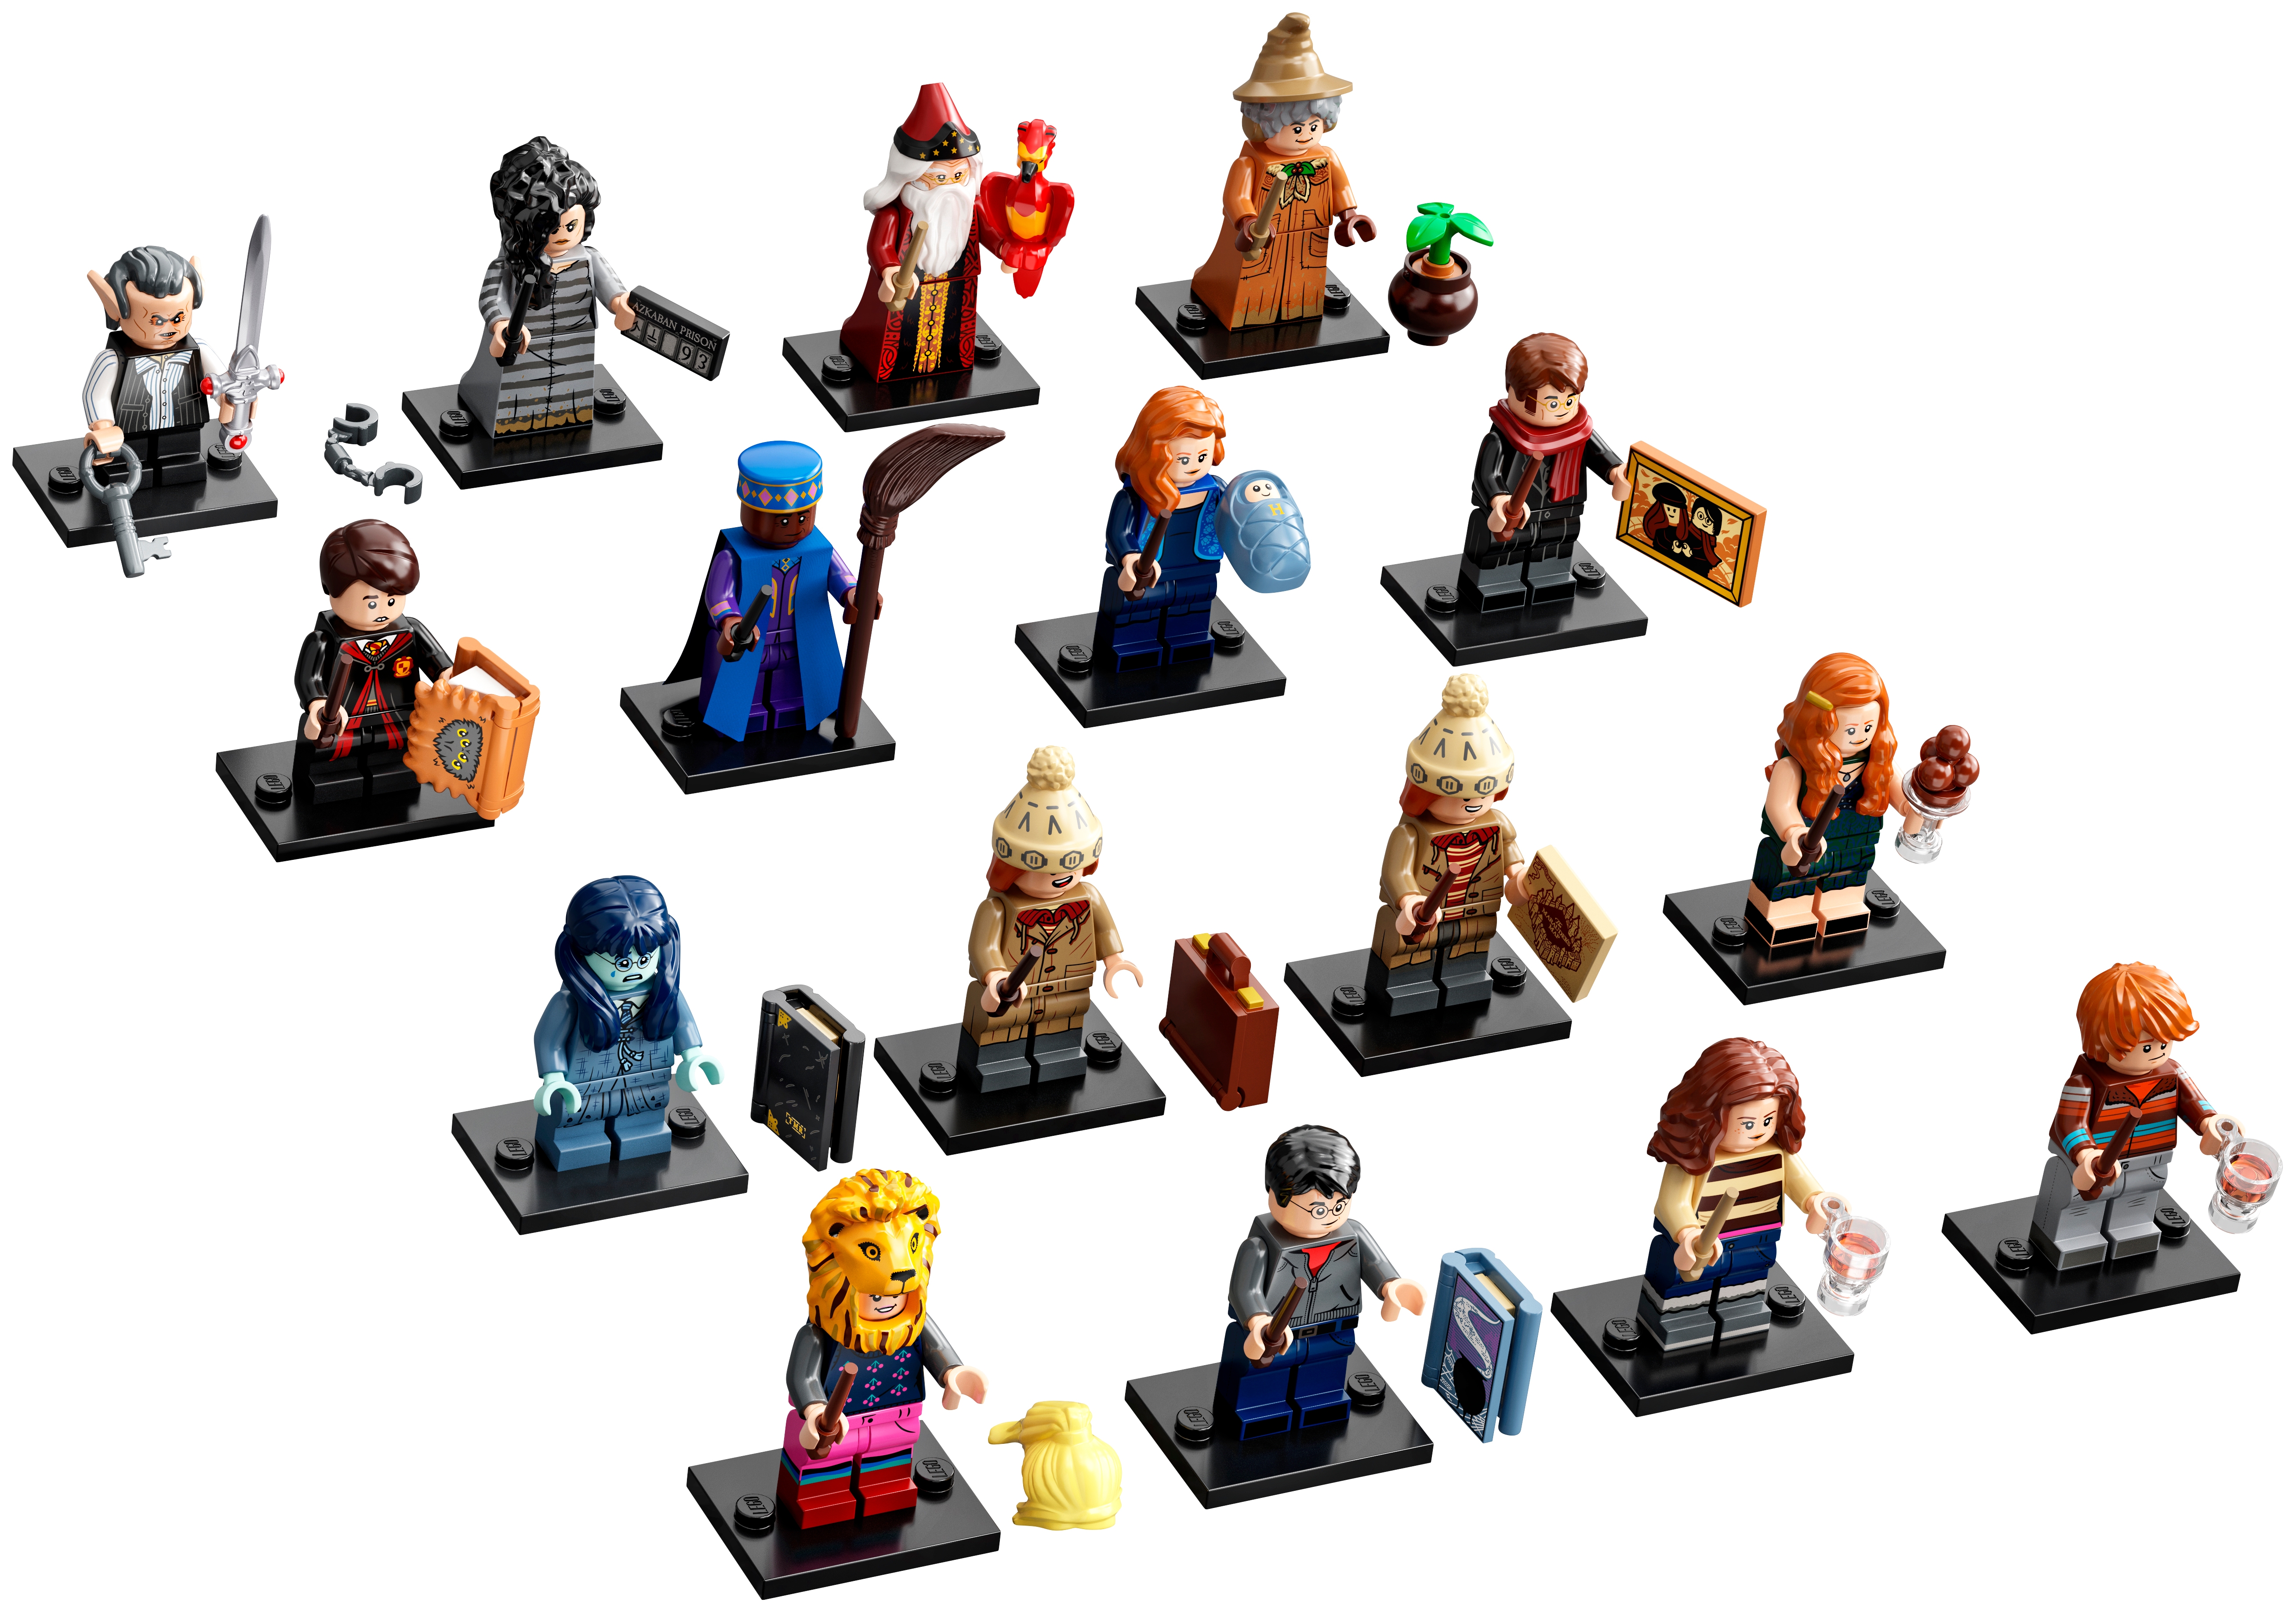 Lego minifigure HARRY POTTER Harry Potter 2 serie 71028